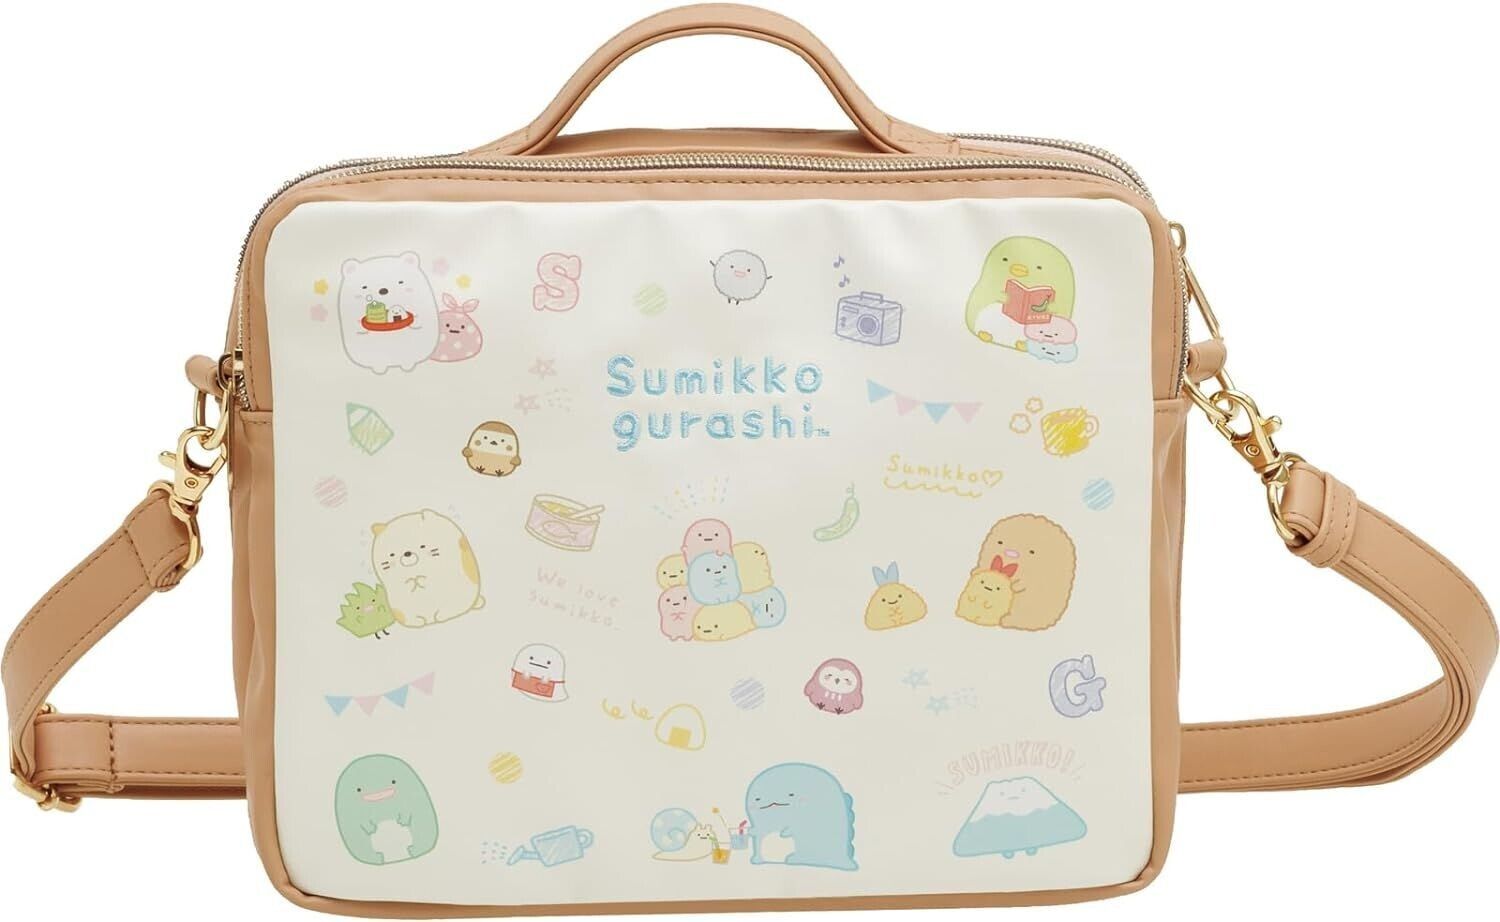 San-X Sumikko Gurashi Sumikore Bag Sumikko Gurashi Collection Shoulder Bag New